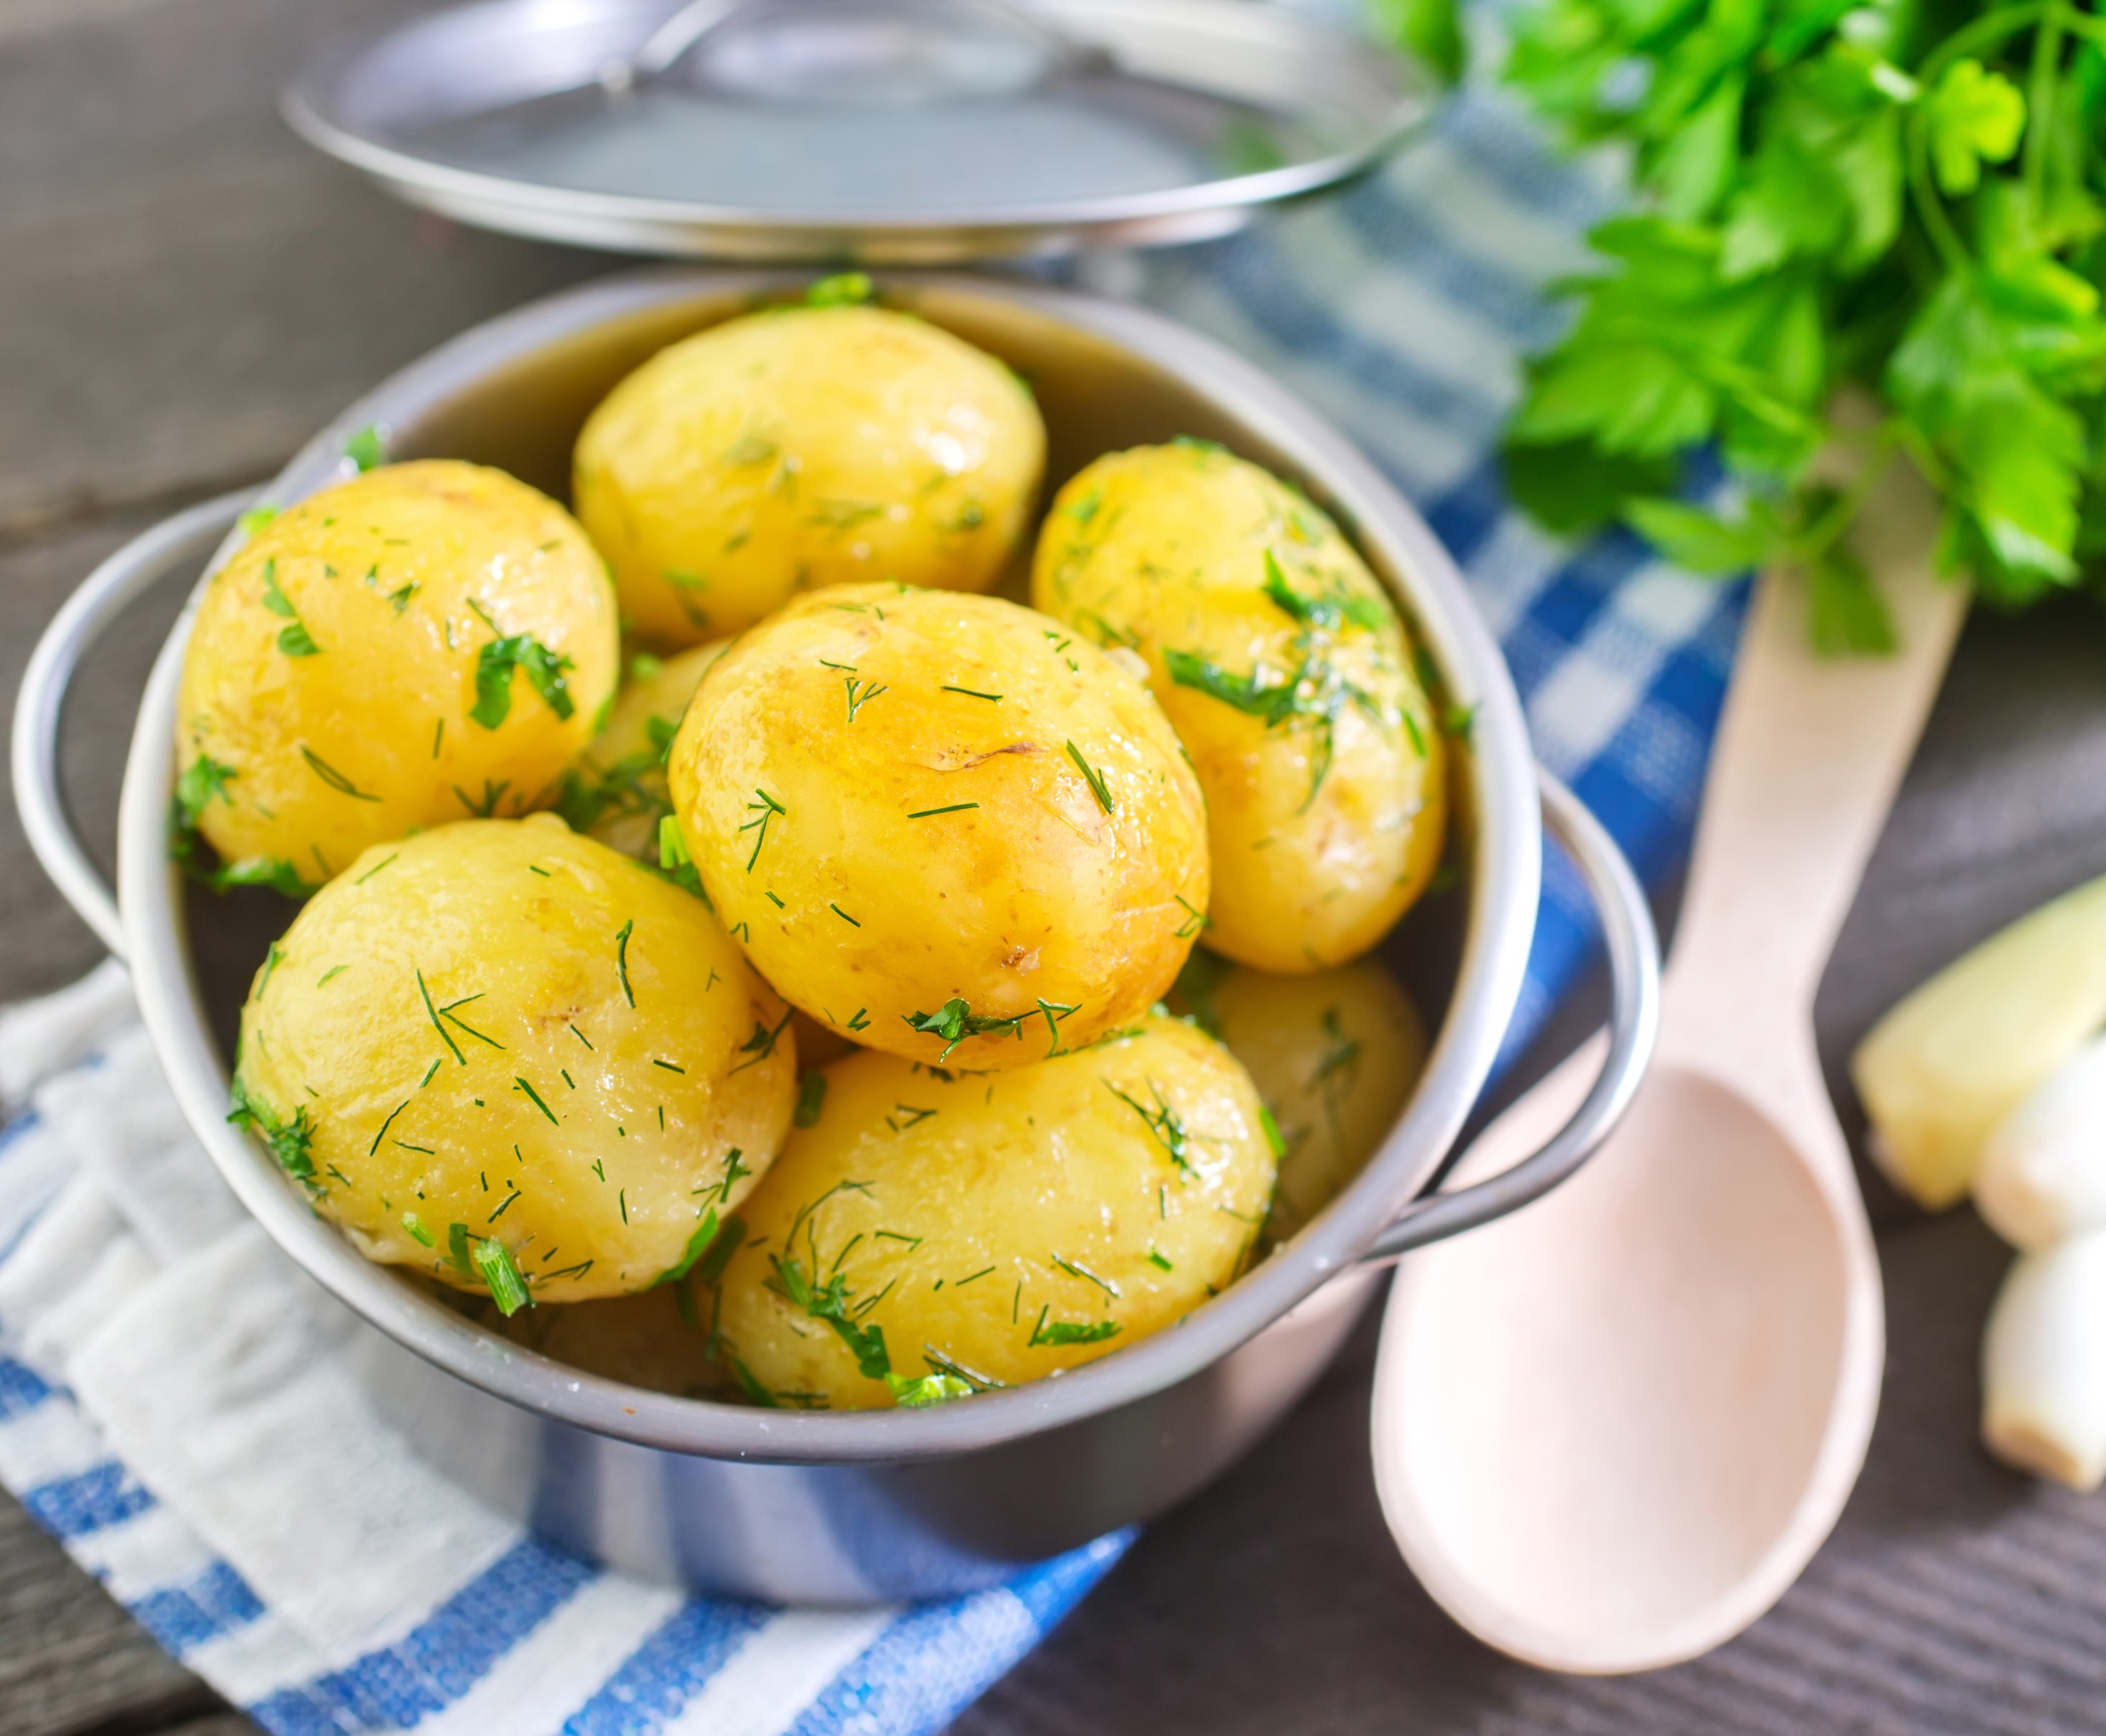 Image result for potatoe,nari